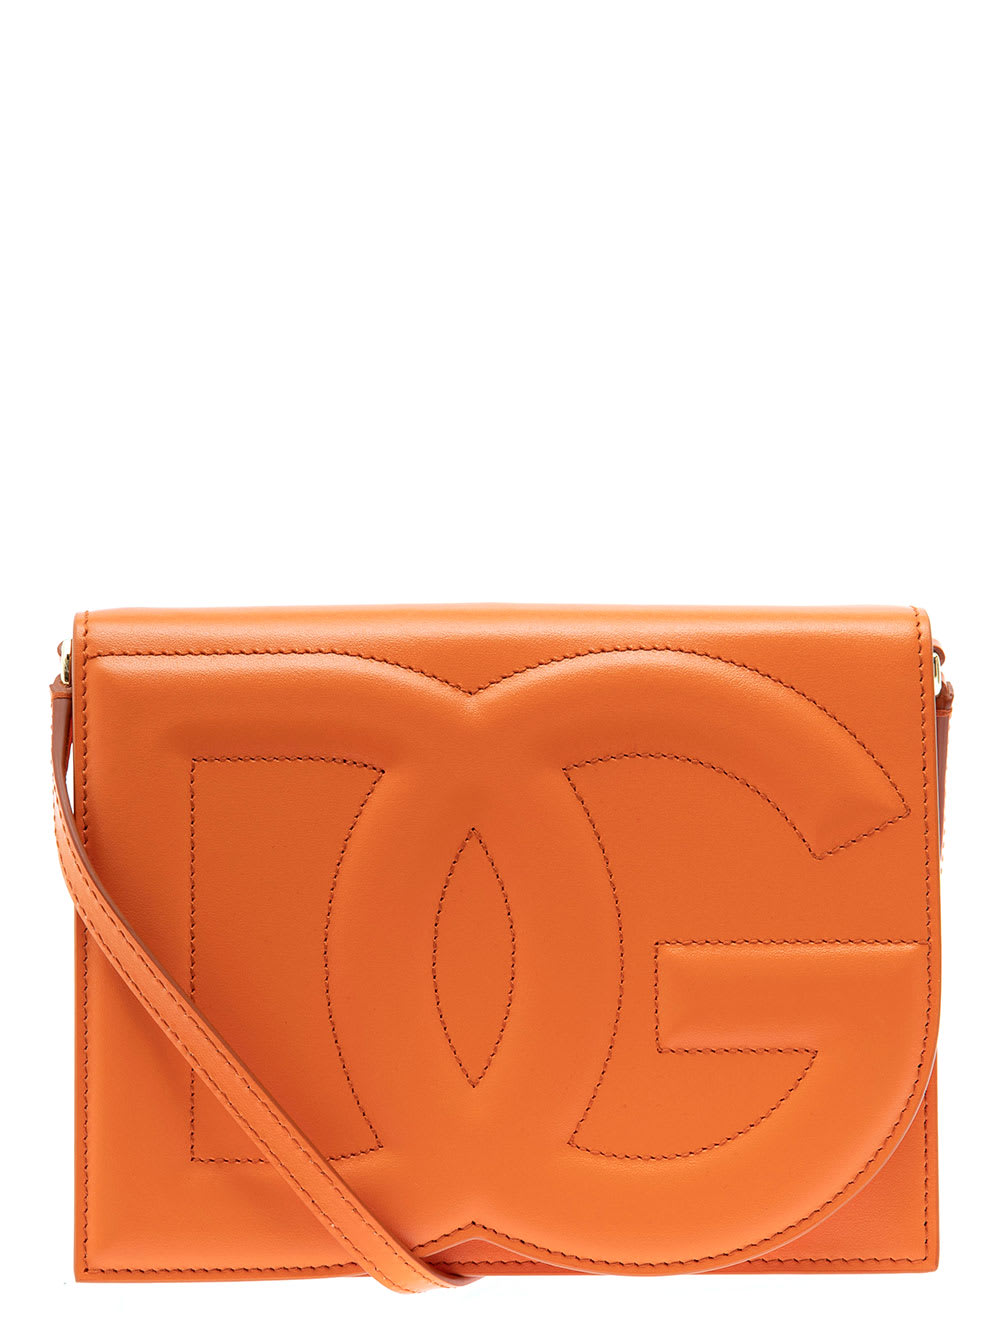 Dolce & Gabbana Orange Embossed Crossbody Bag Woman Dolce & gabbana